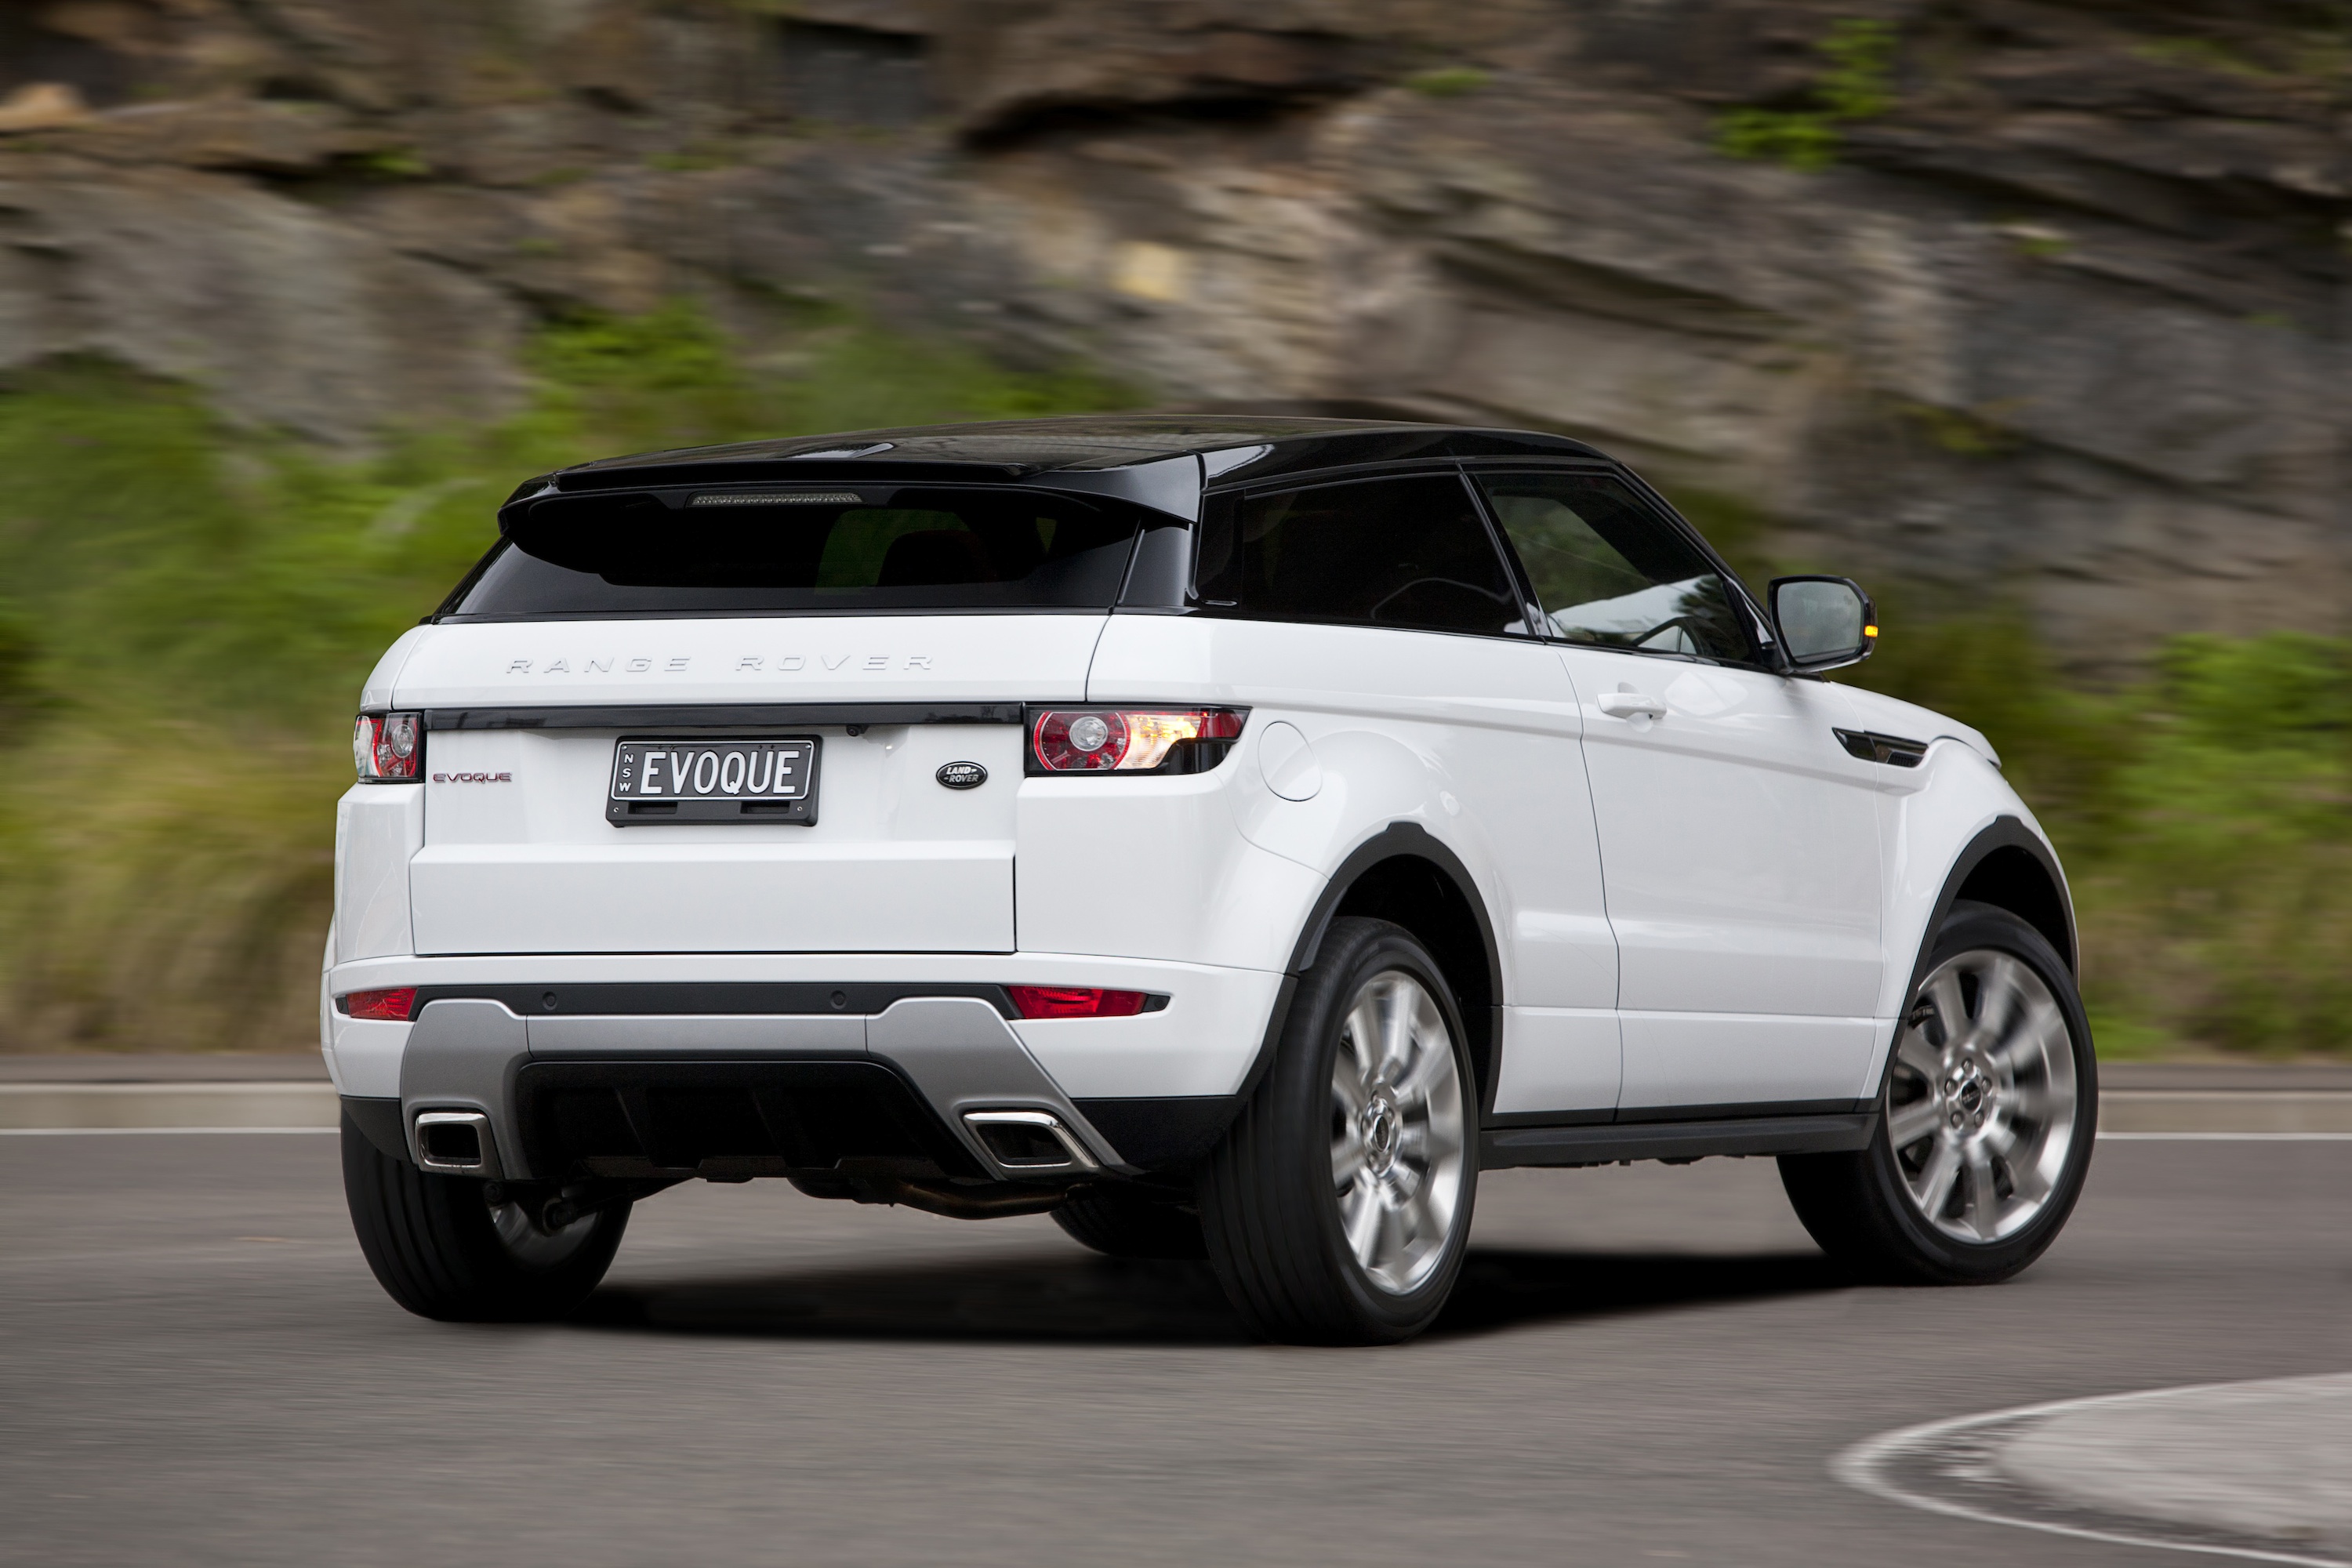 Land Rover Range Rover Evoque interior specifications